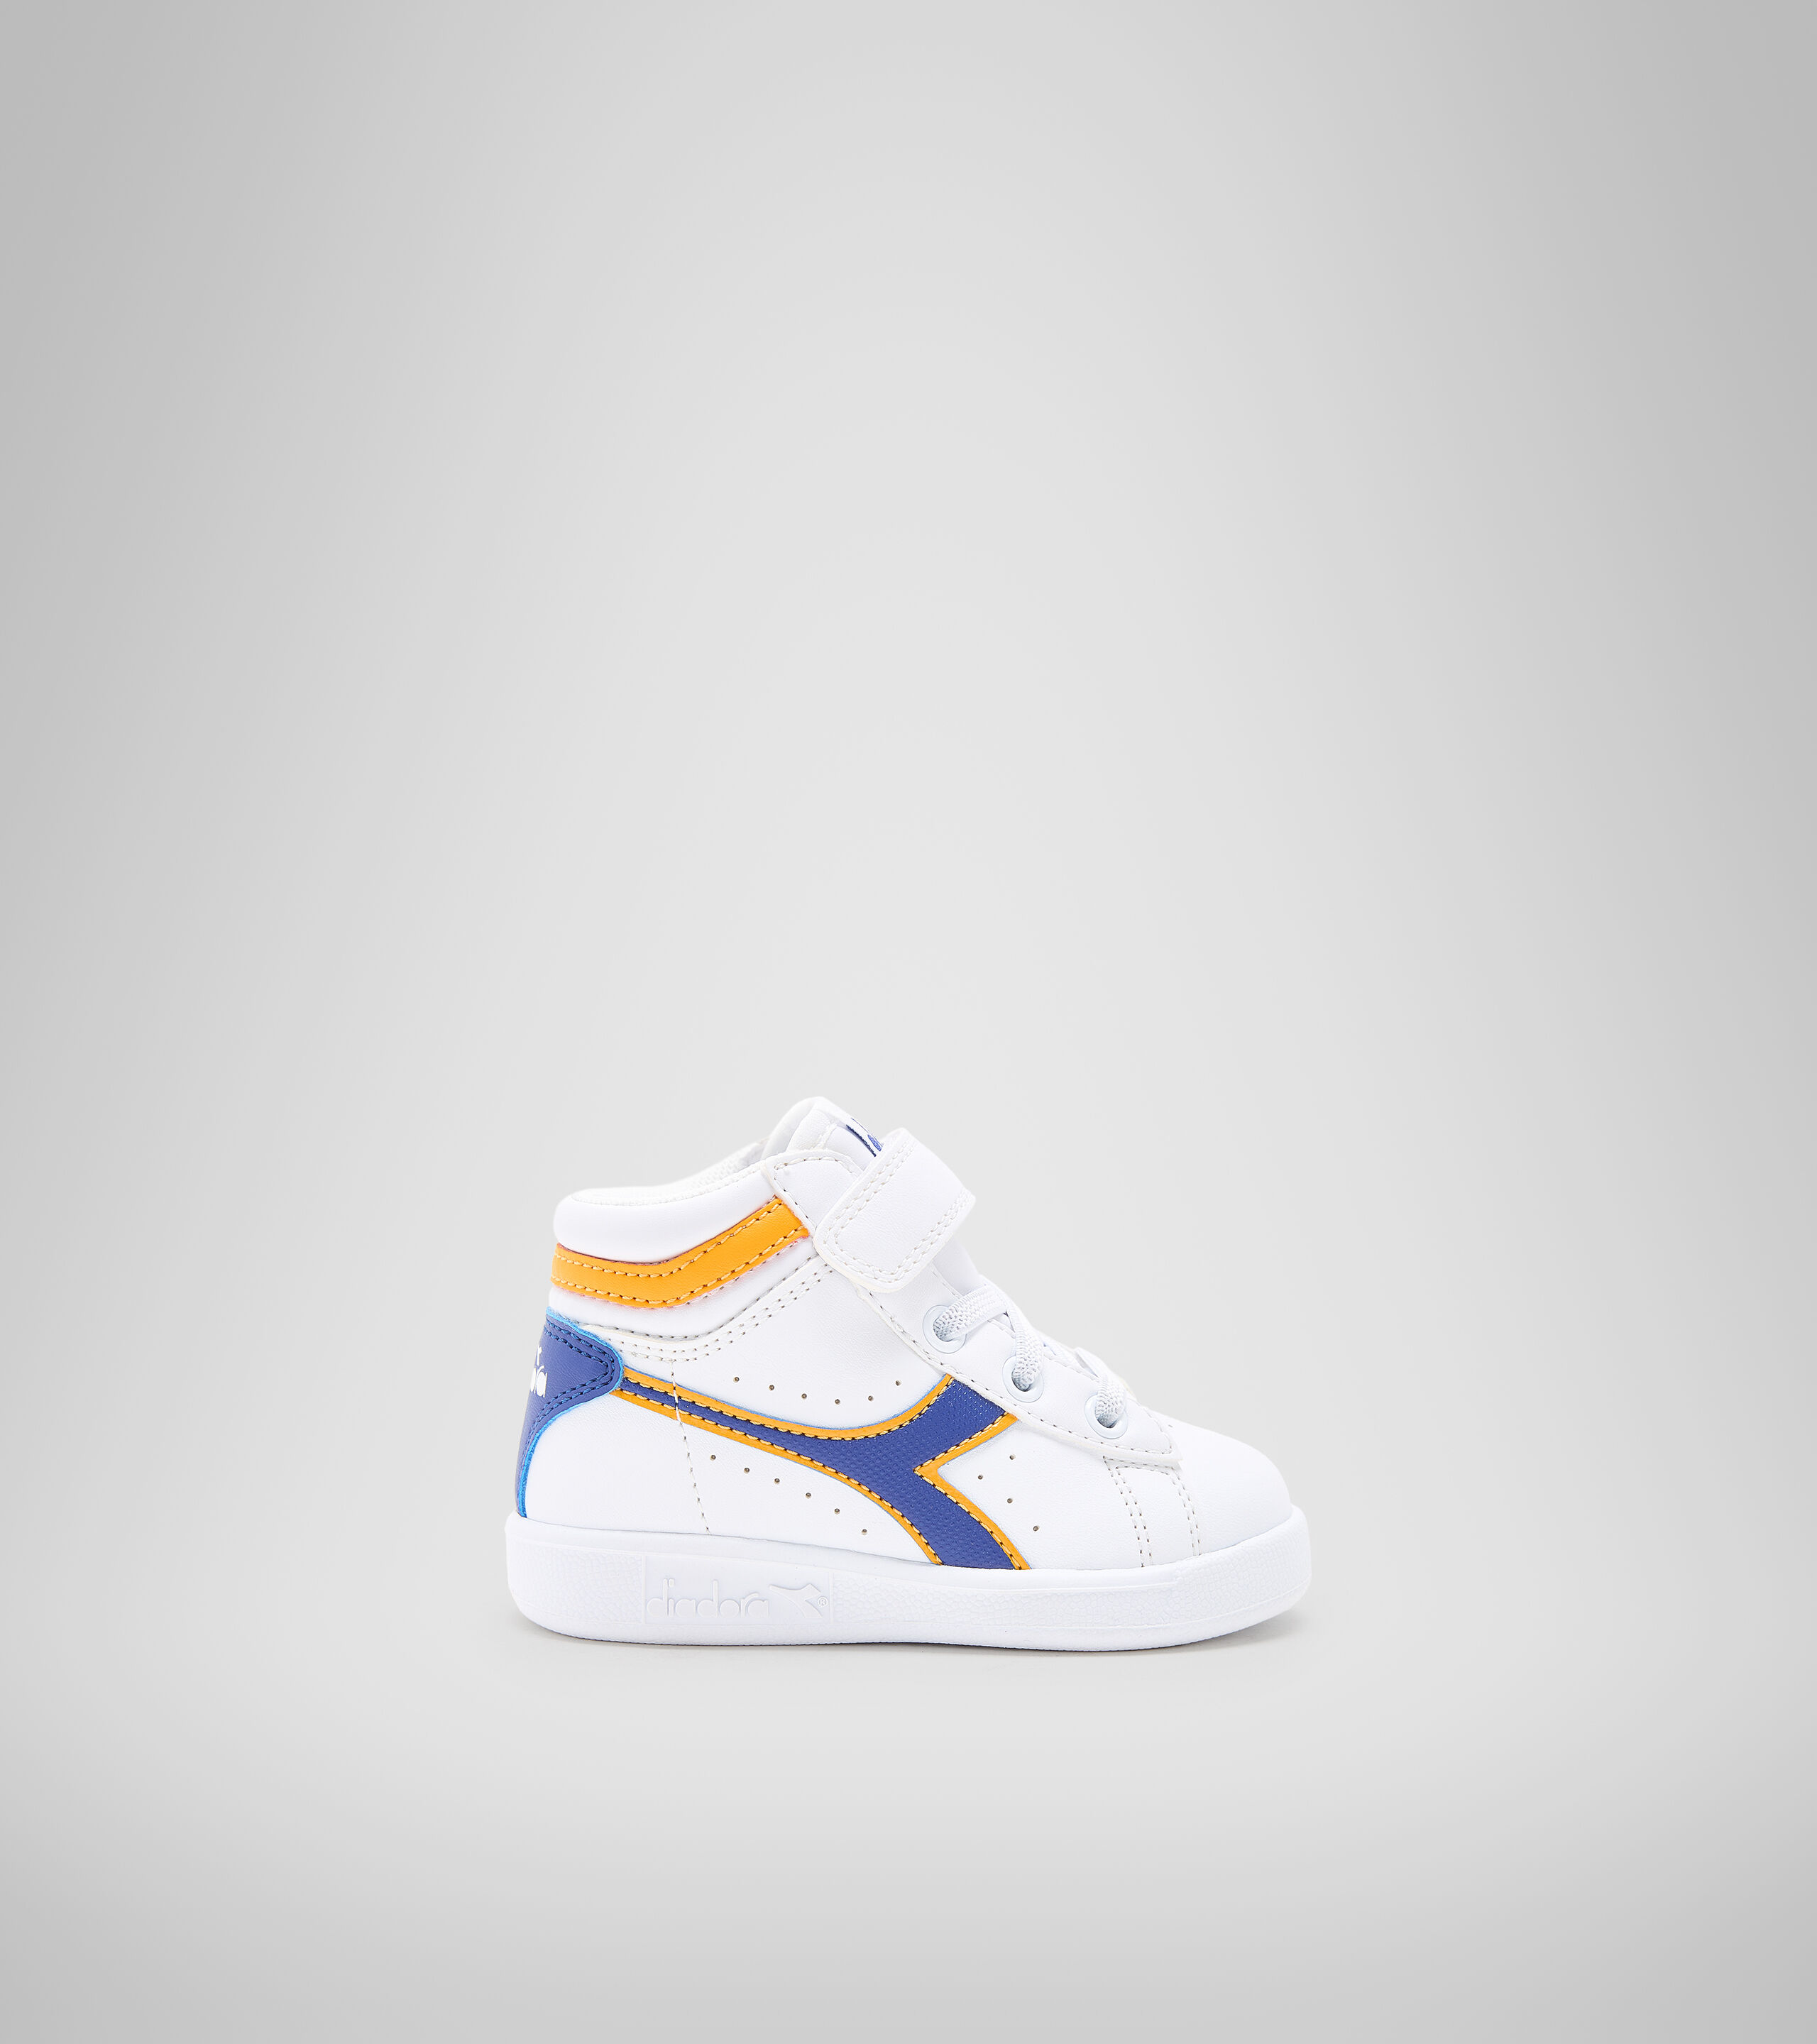 DiadoraDiadora Shoes Child 60063 White Blue 176605 Bleu Marque  